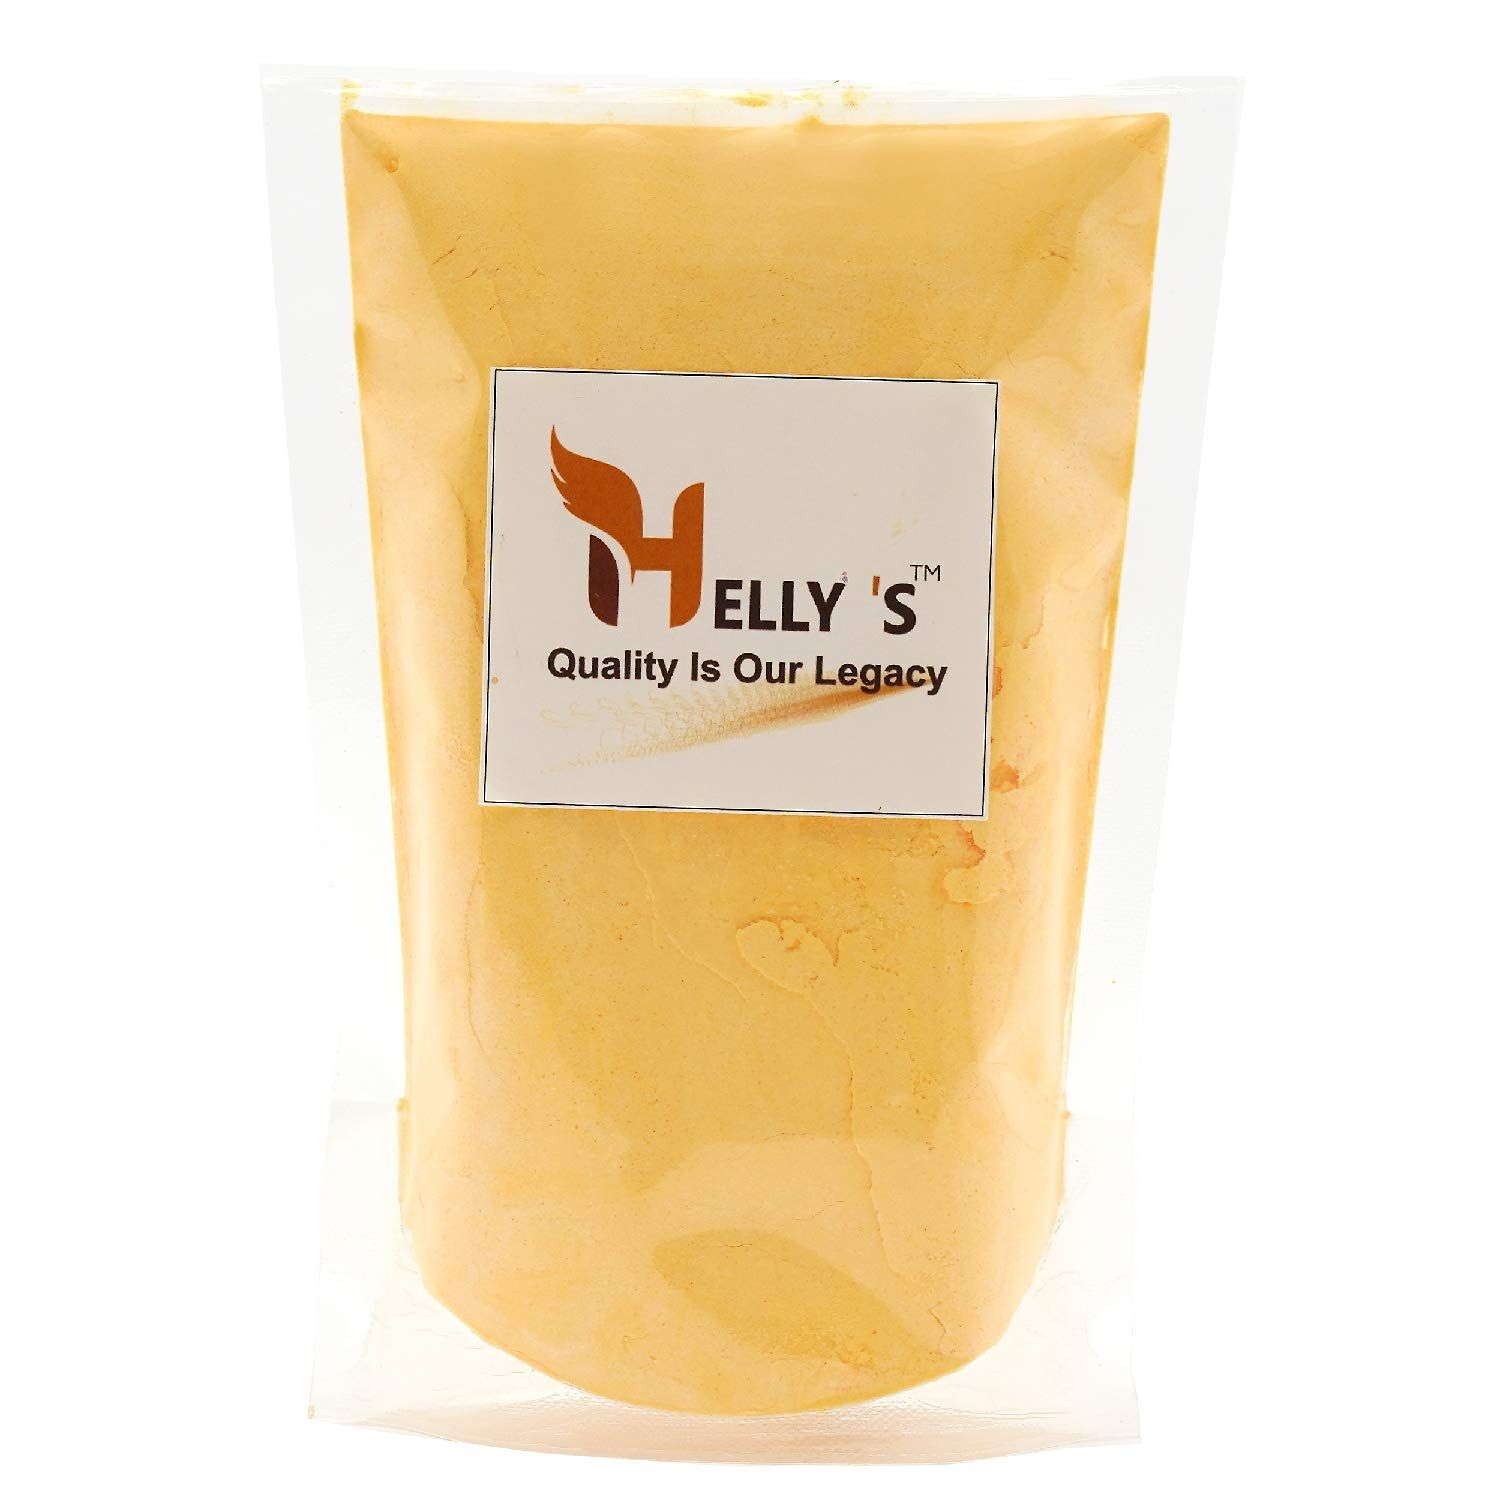 Helly's Eggless Custard Powder Mango Flavour Image